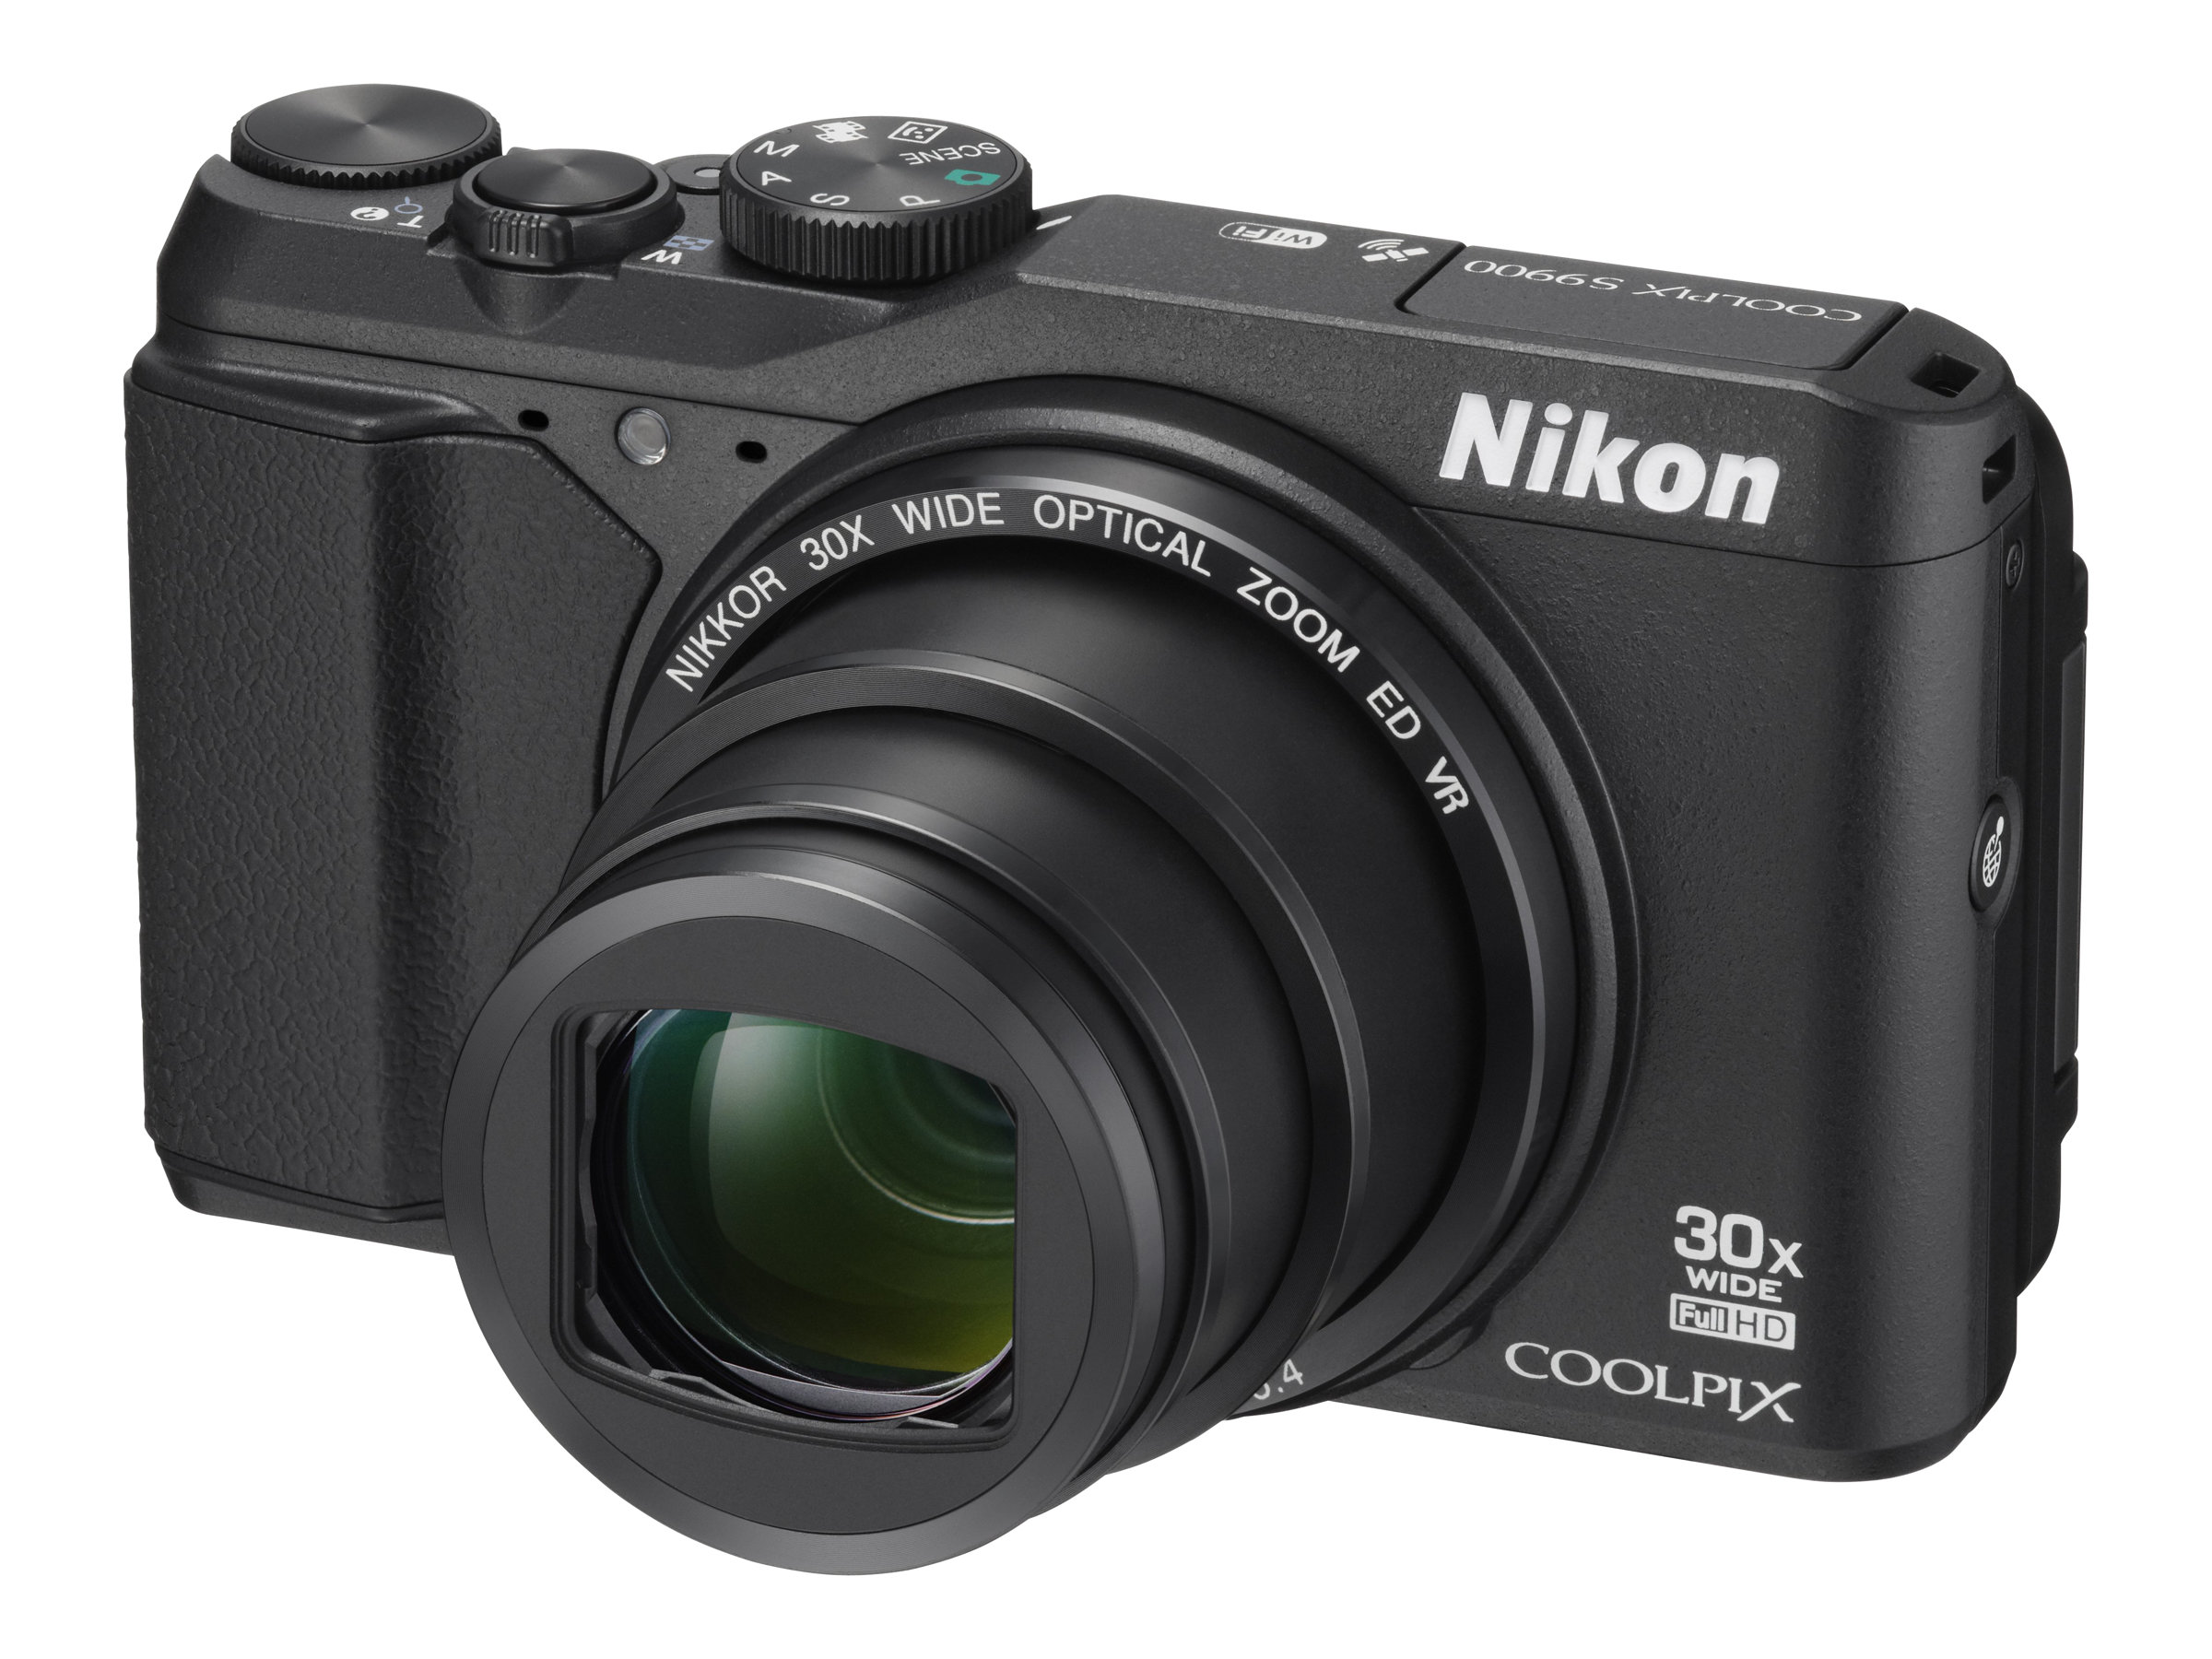 Nikon Coolpix S9900 - Digital camera - compact - 16.0 MP - 1080p - 30x optical zoom - Wi-Fi, NFC - black - image 1 of 6